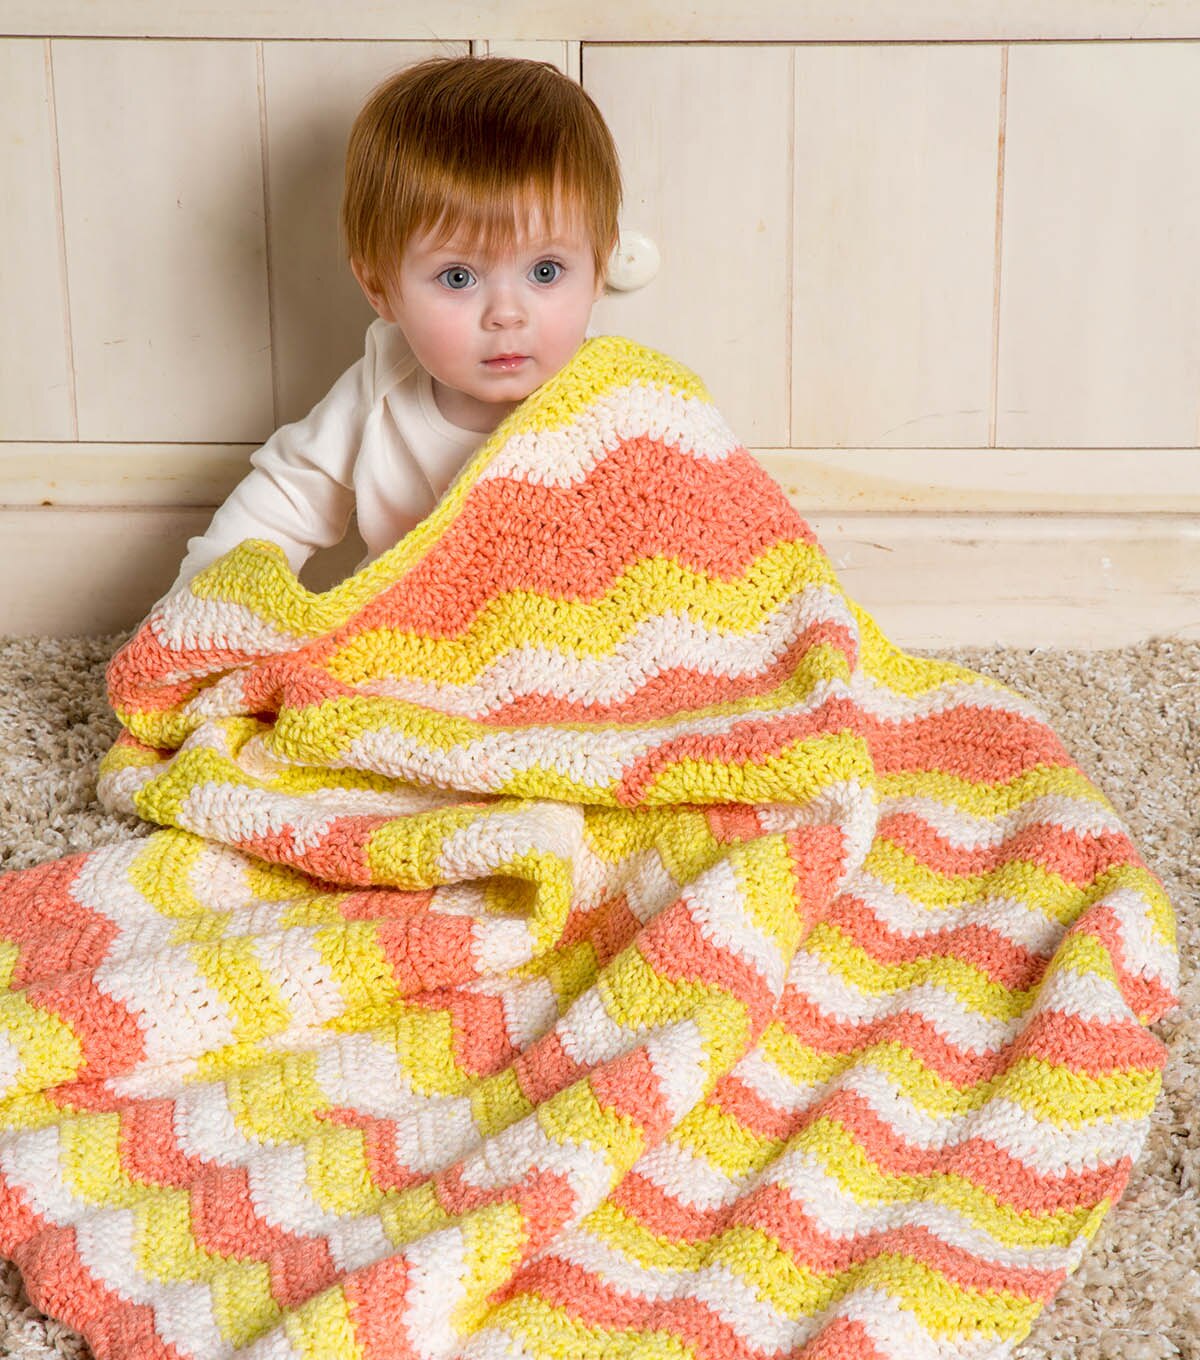 How To Make A Ripple Crochet Baby Blanket | JOANN